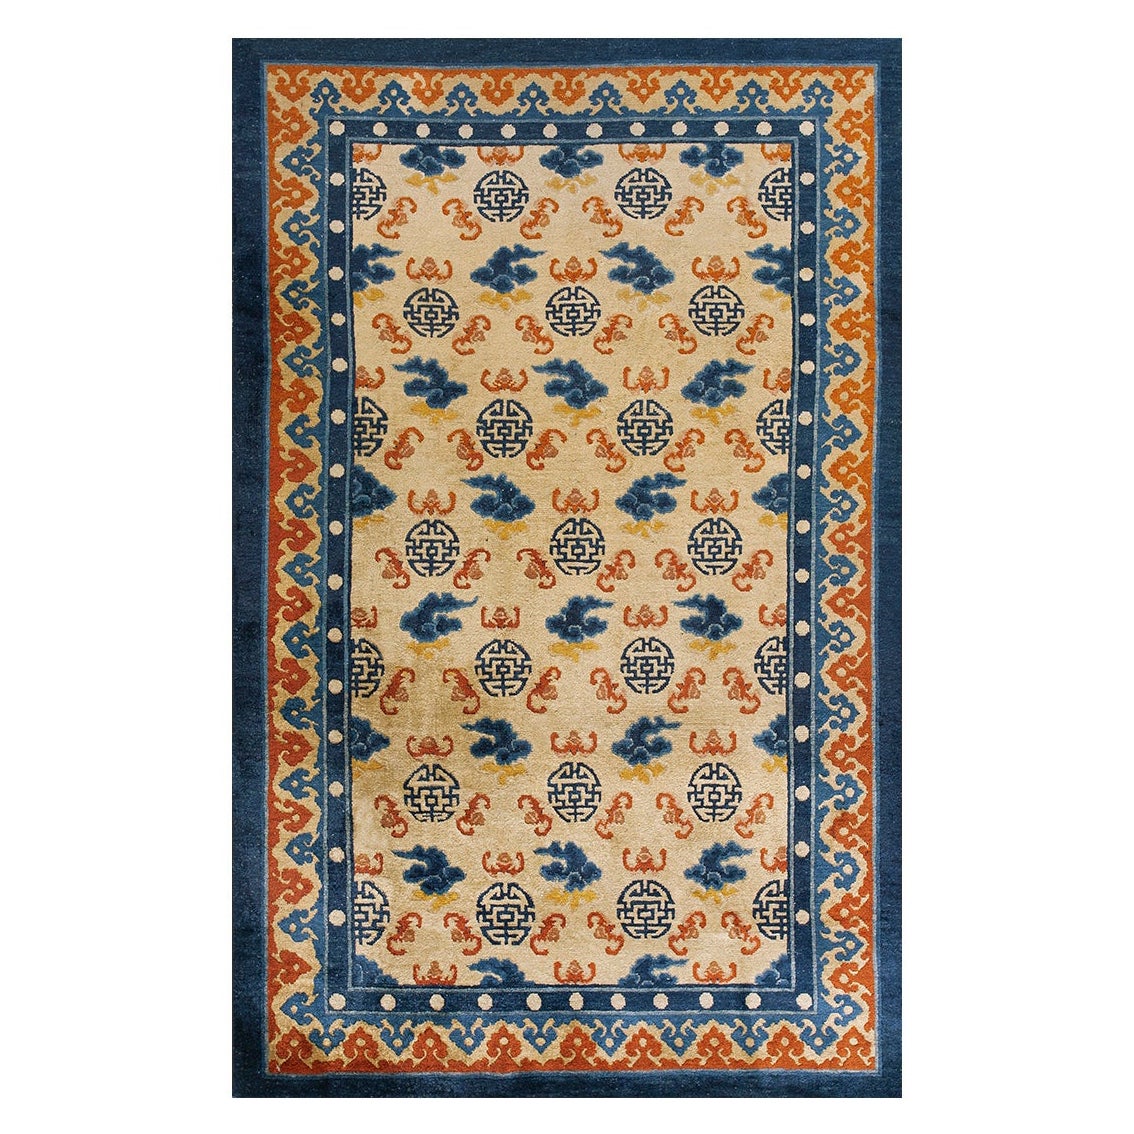 Late 19th Century W. Chinese Kansu Carpet ( 5'2" x 8' - 157 x 245 )